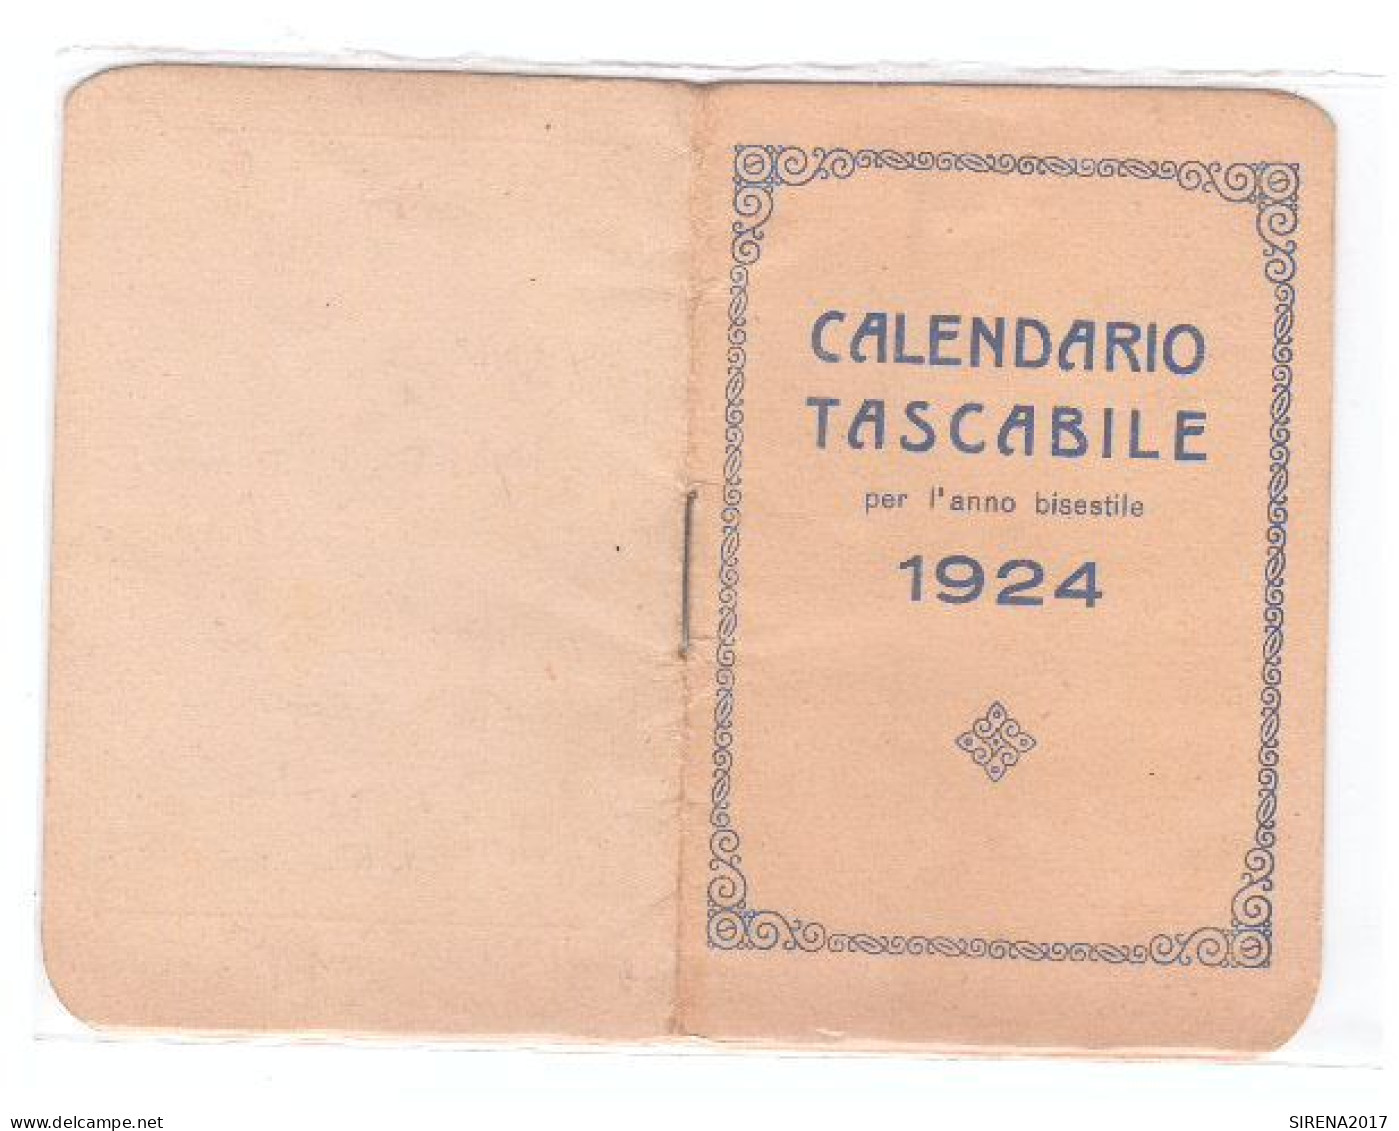 CALENDARIO TASCABILE PER L'ANNO BISESTILE 1924 - Kleinformat : 1961-70